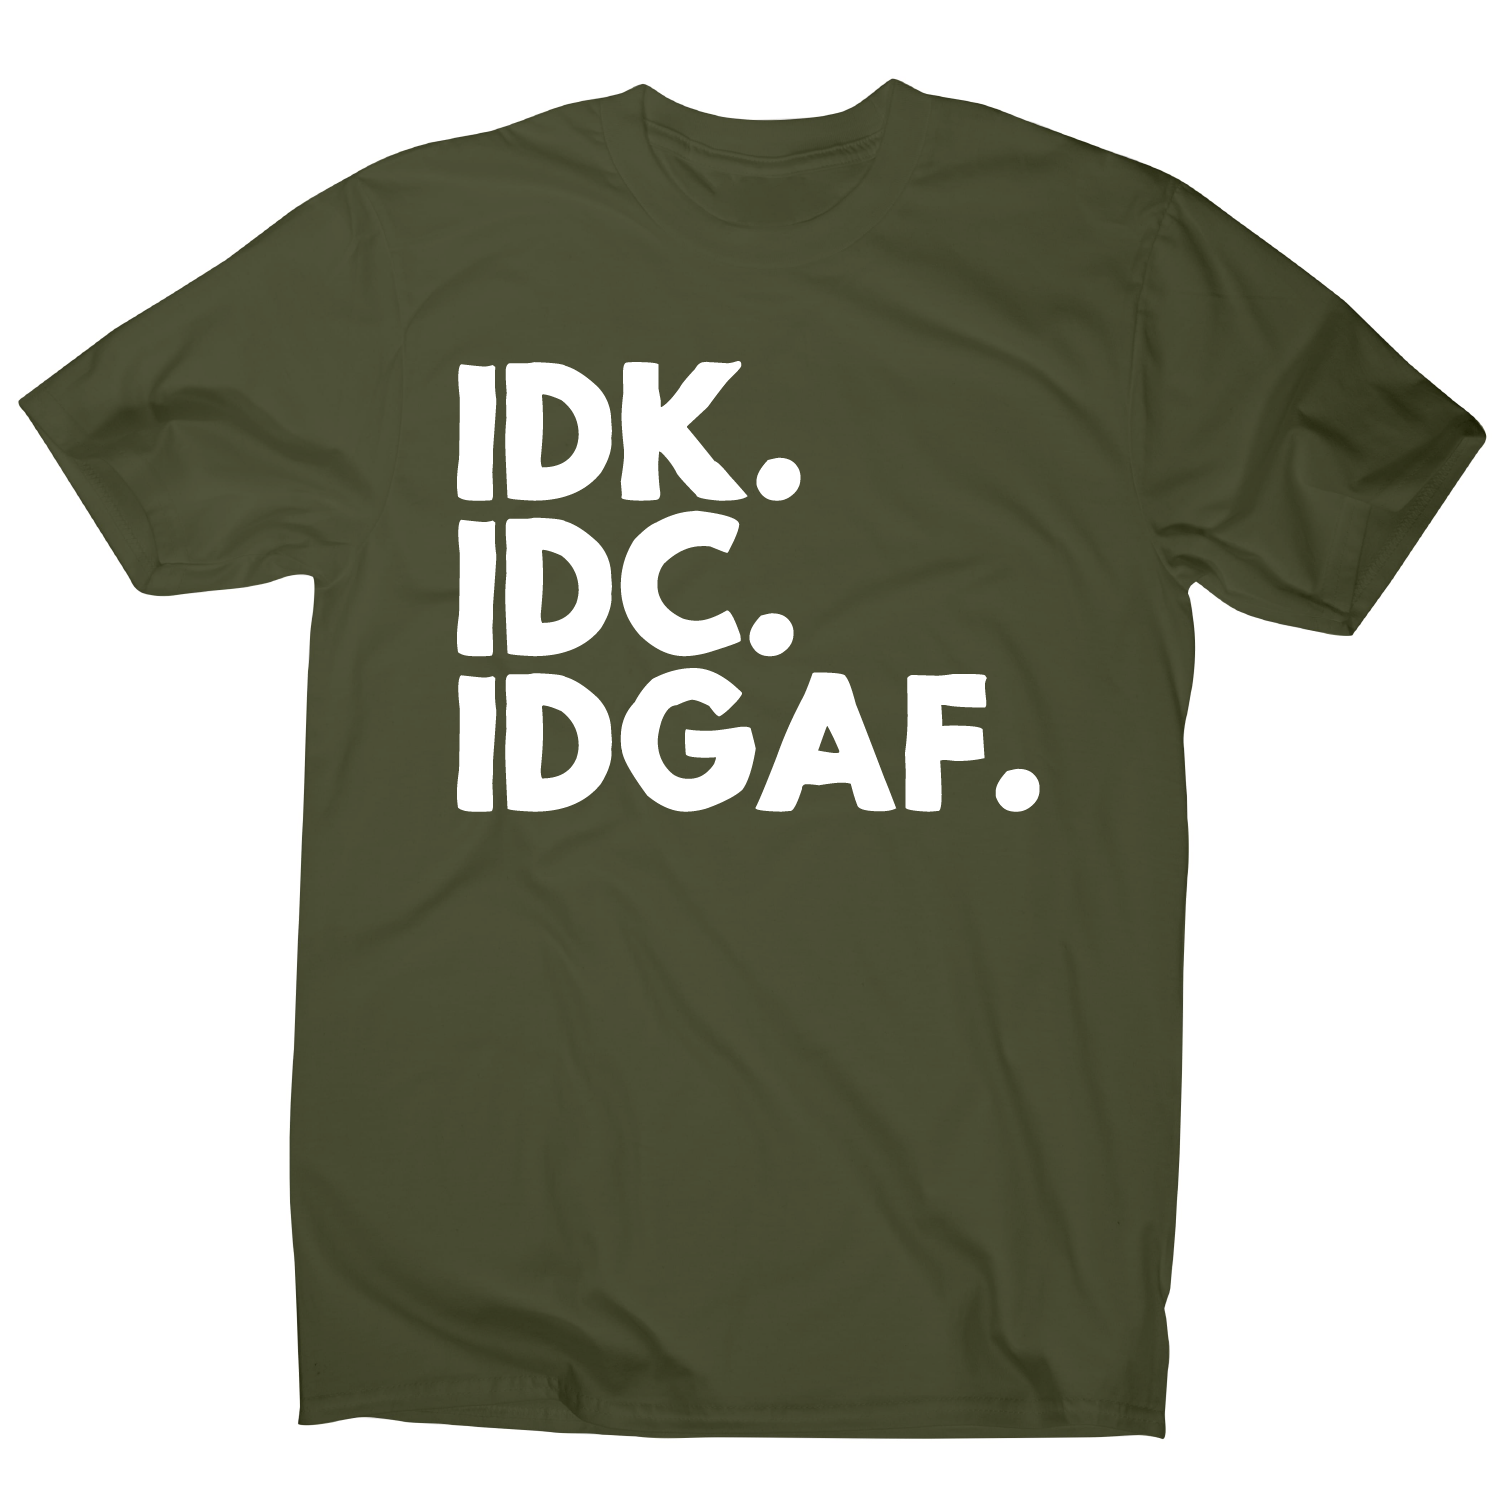 Idk.idc.idgaf - funny rude t-shirt men's– Graphic Gear